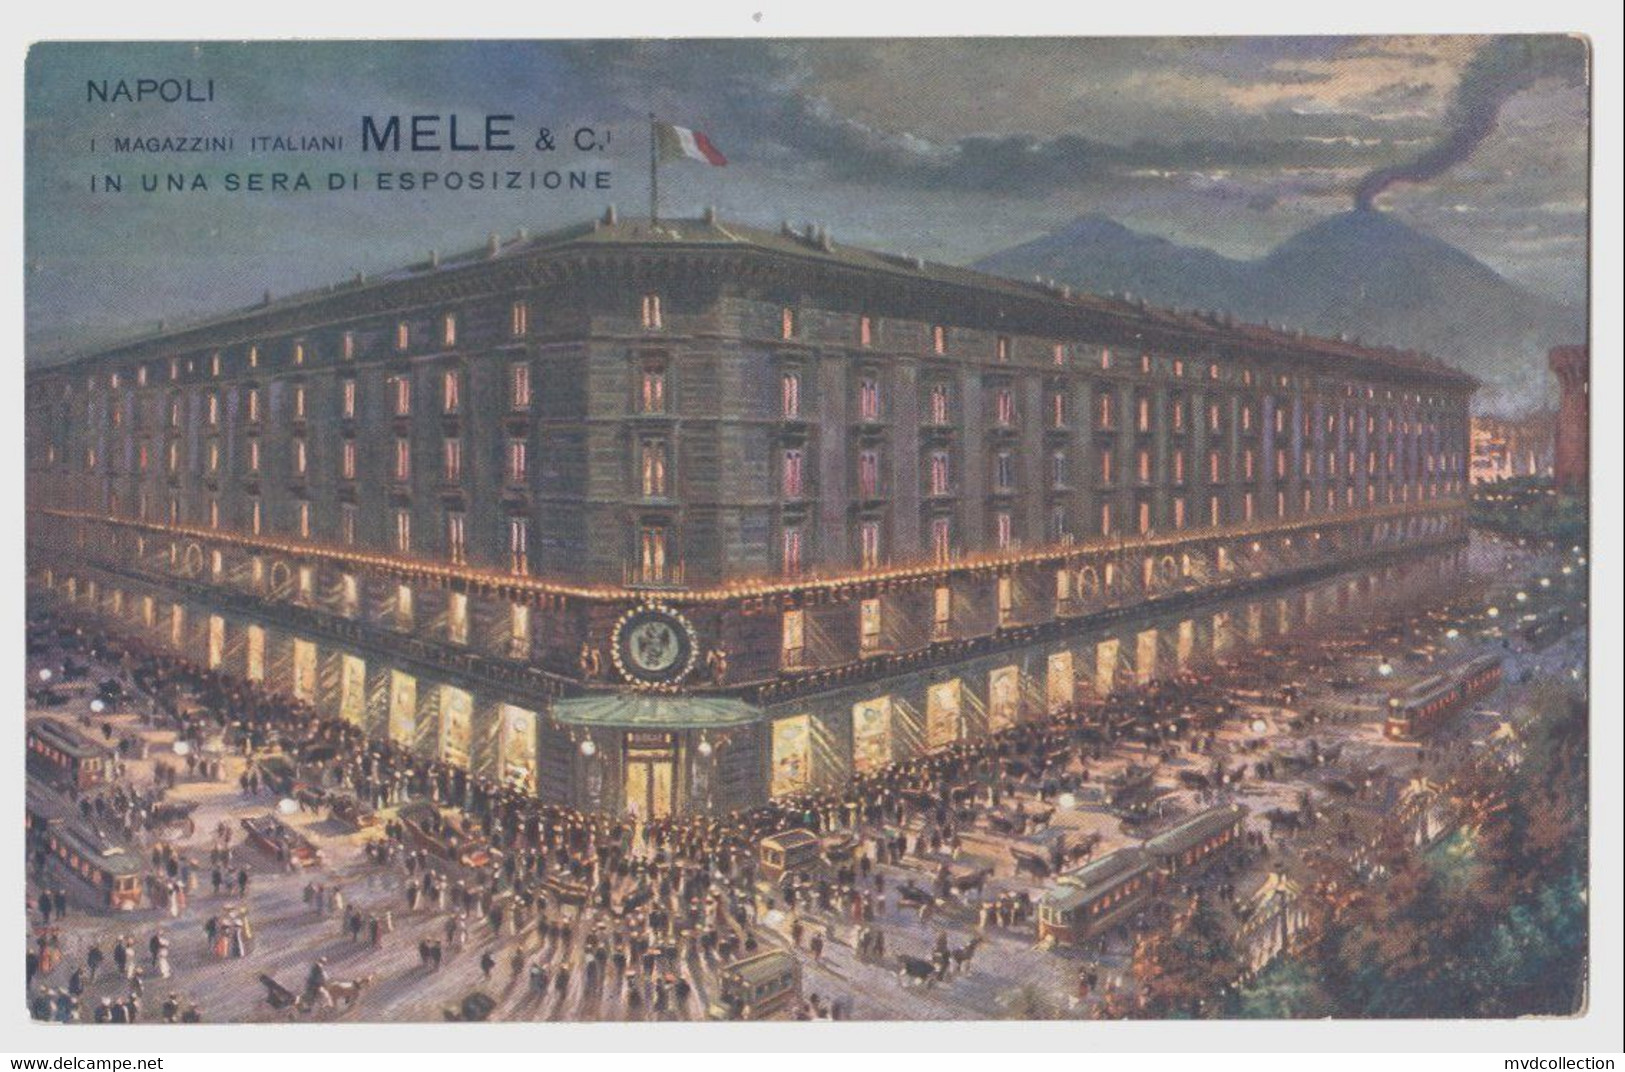 ITALY NAPOLI "MAGAZZINI ITALIANI MELE" Cartolina PUBBLICITARIA ADVERTISING PC 1910s - Napoli (Naples)